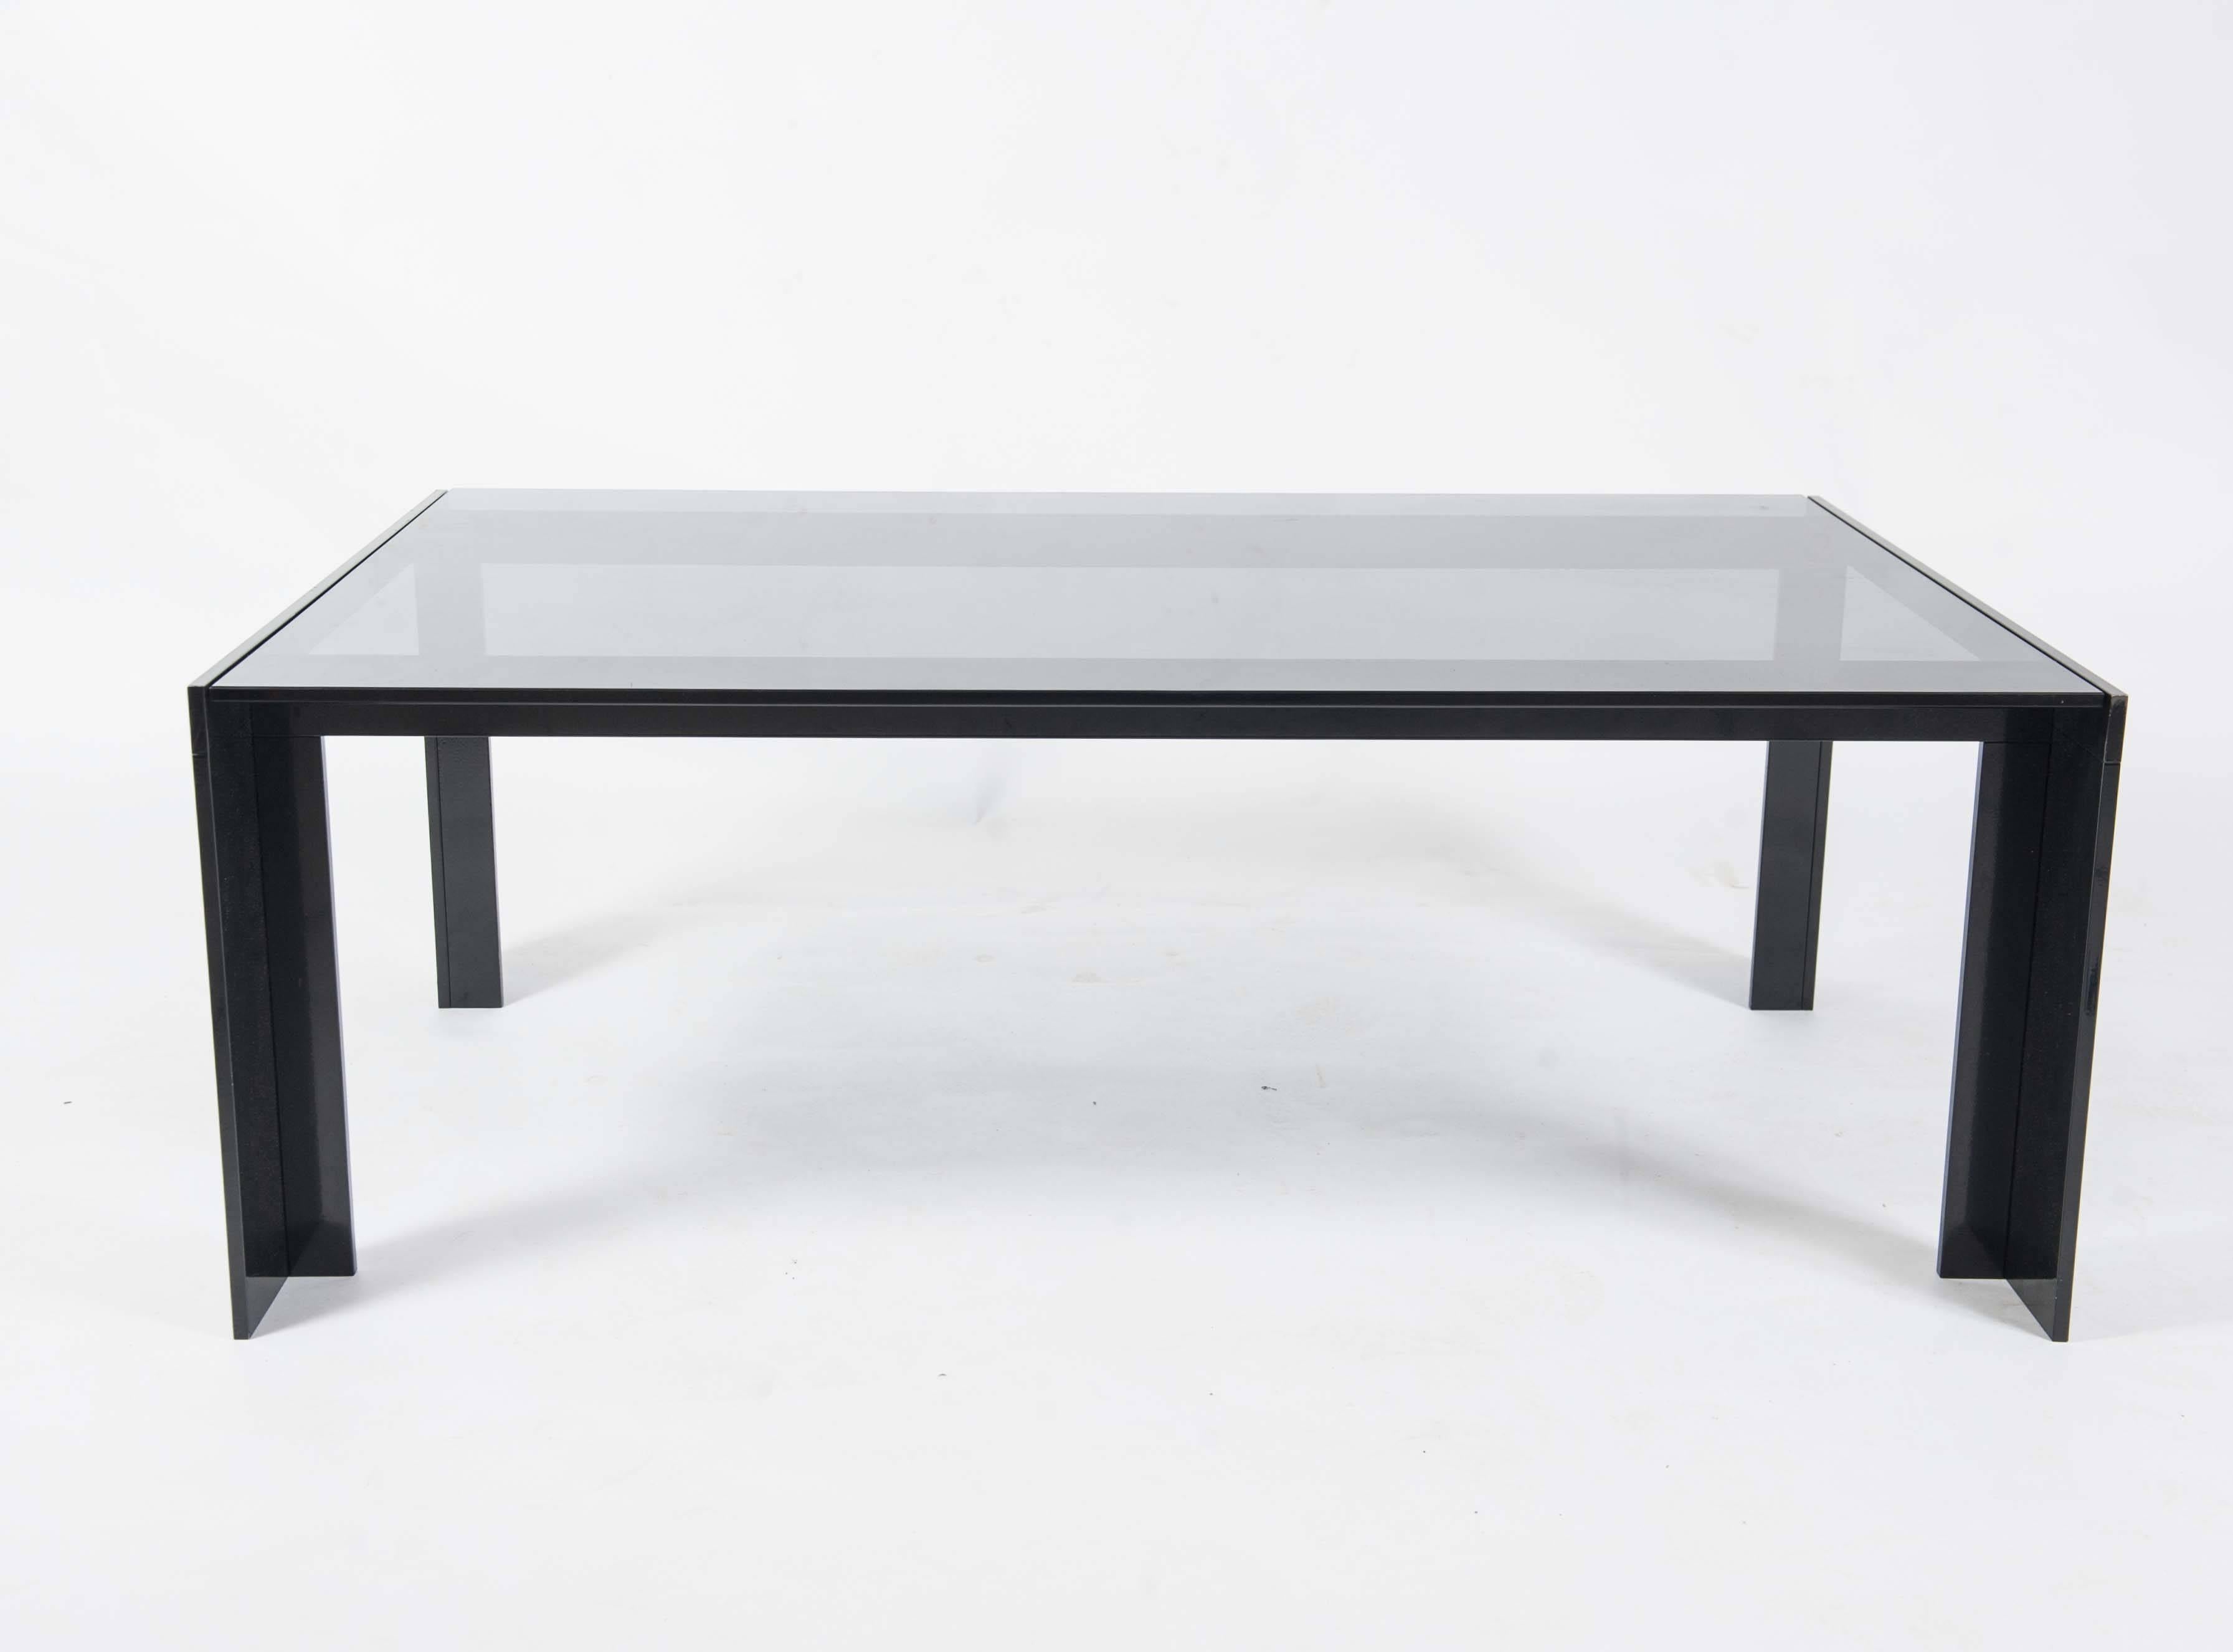 International Style Modern Coffee Table Made of Powder Coated Black Steel and Grey Smoke Glass  